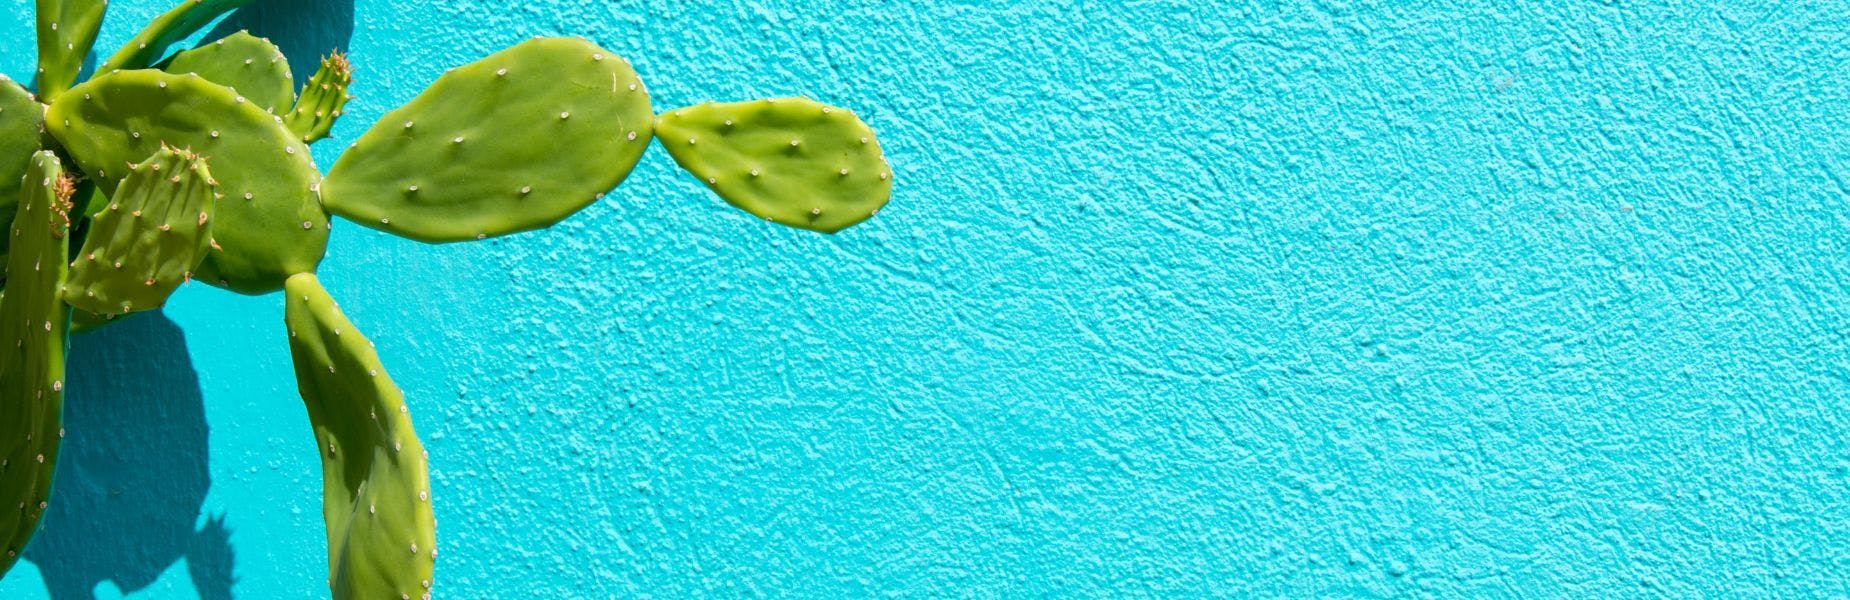 cactus voor felblauwe muur